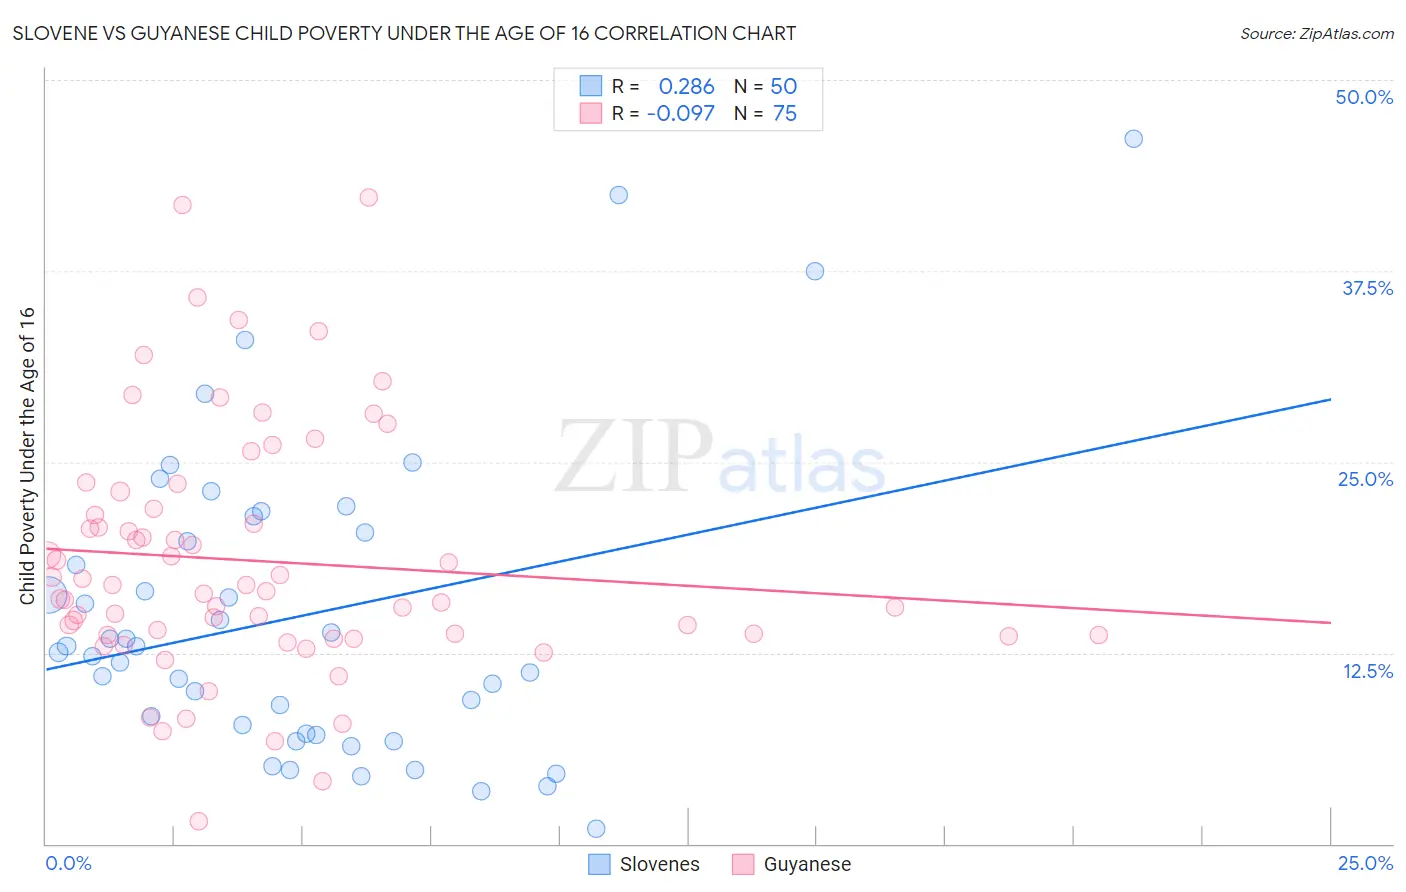 Slovene vs Guyanese Child Poverty Under the Age of 16